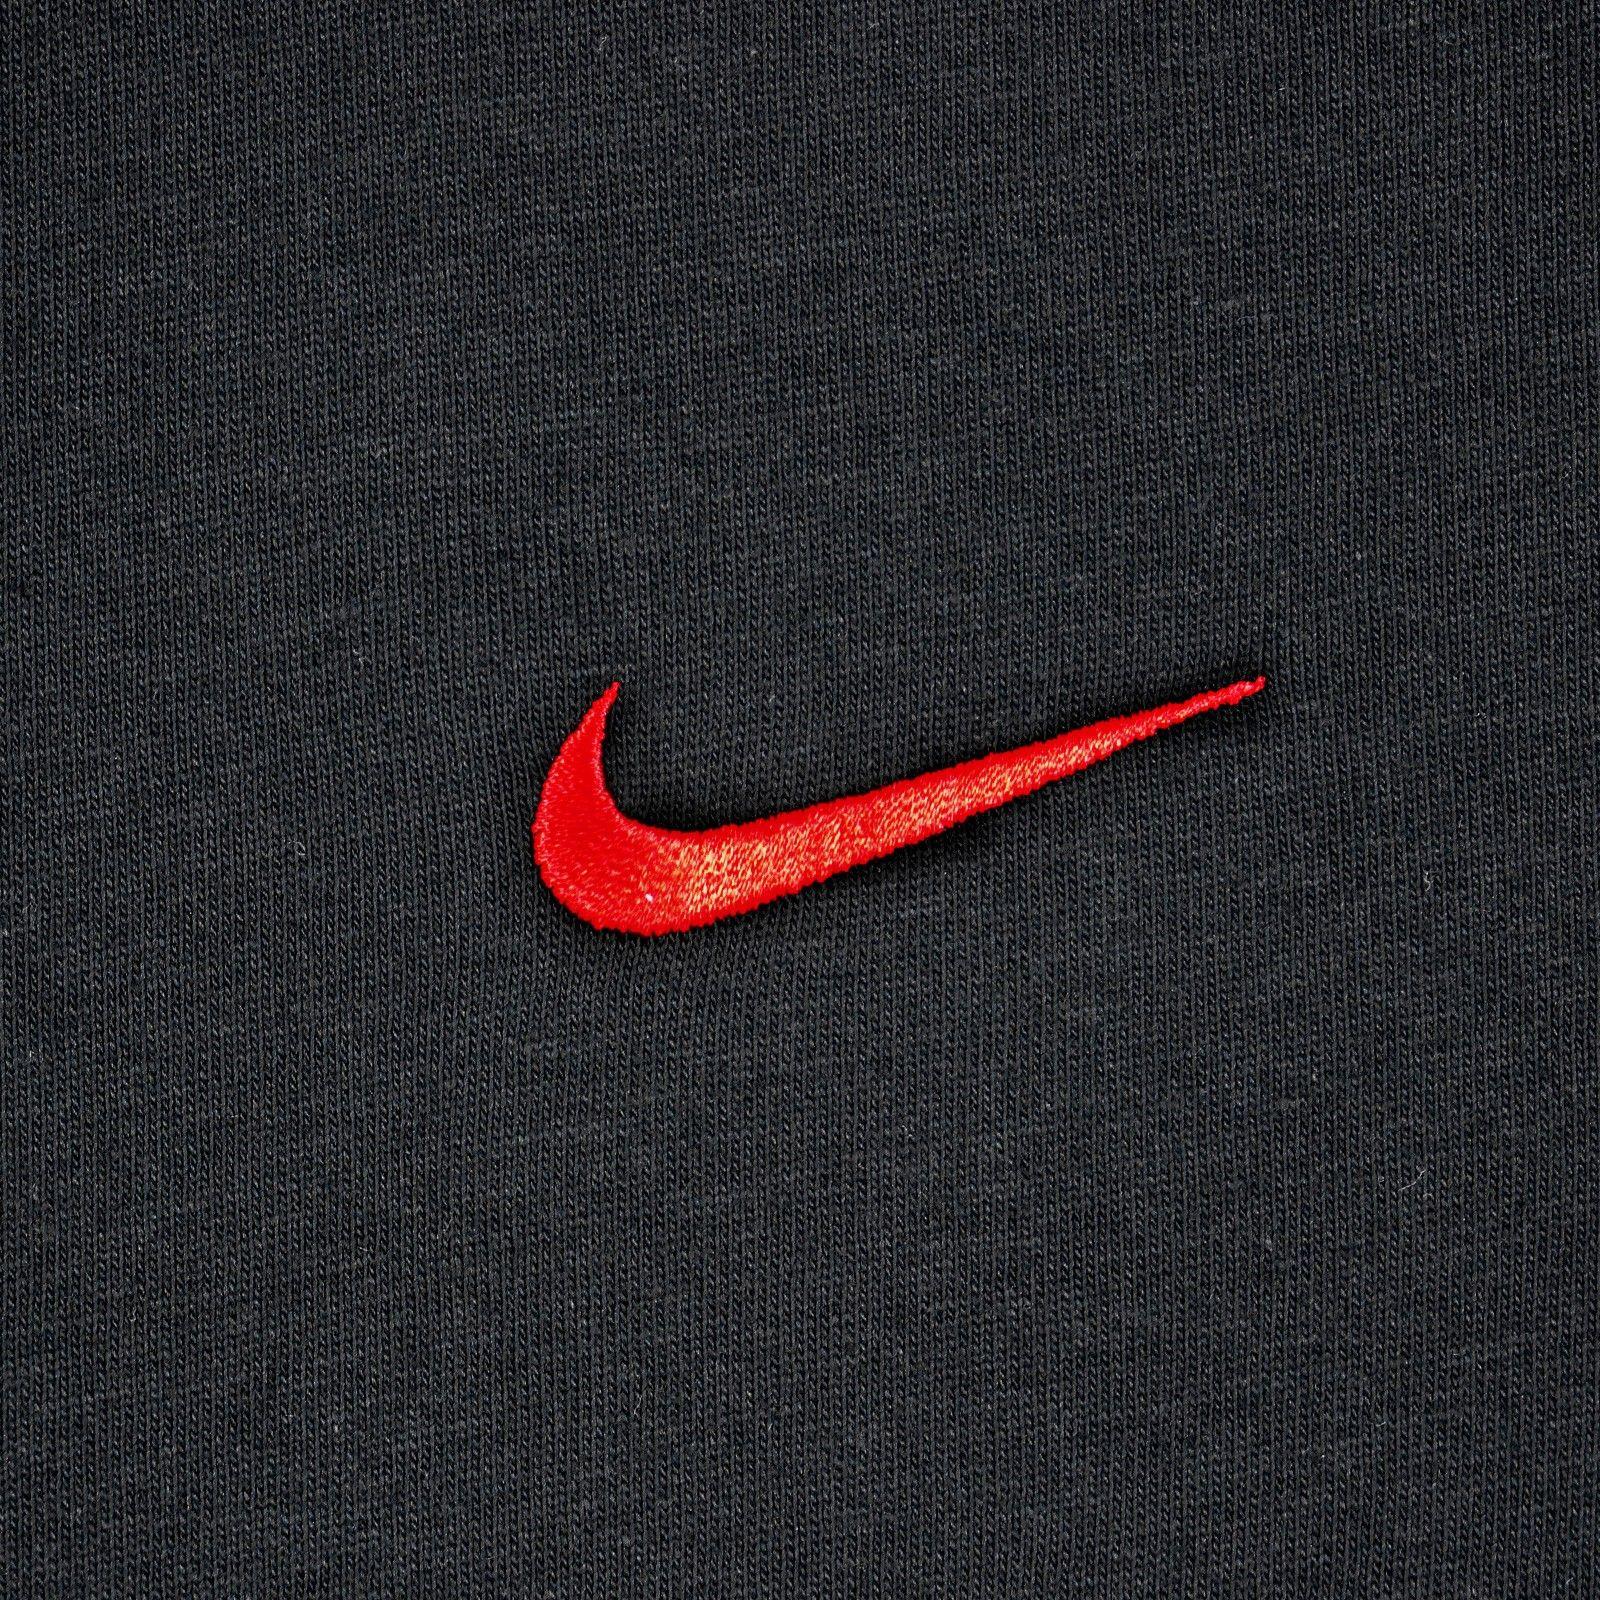 Black and Red Nike Logo - Men's Nike T Shirt Swoosh Tee Tick. ACTIVEWEAR